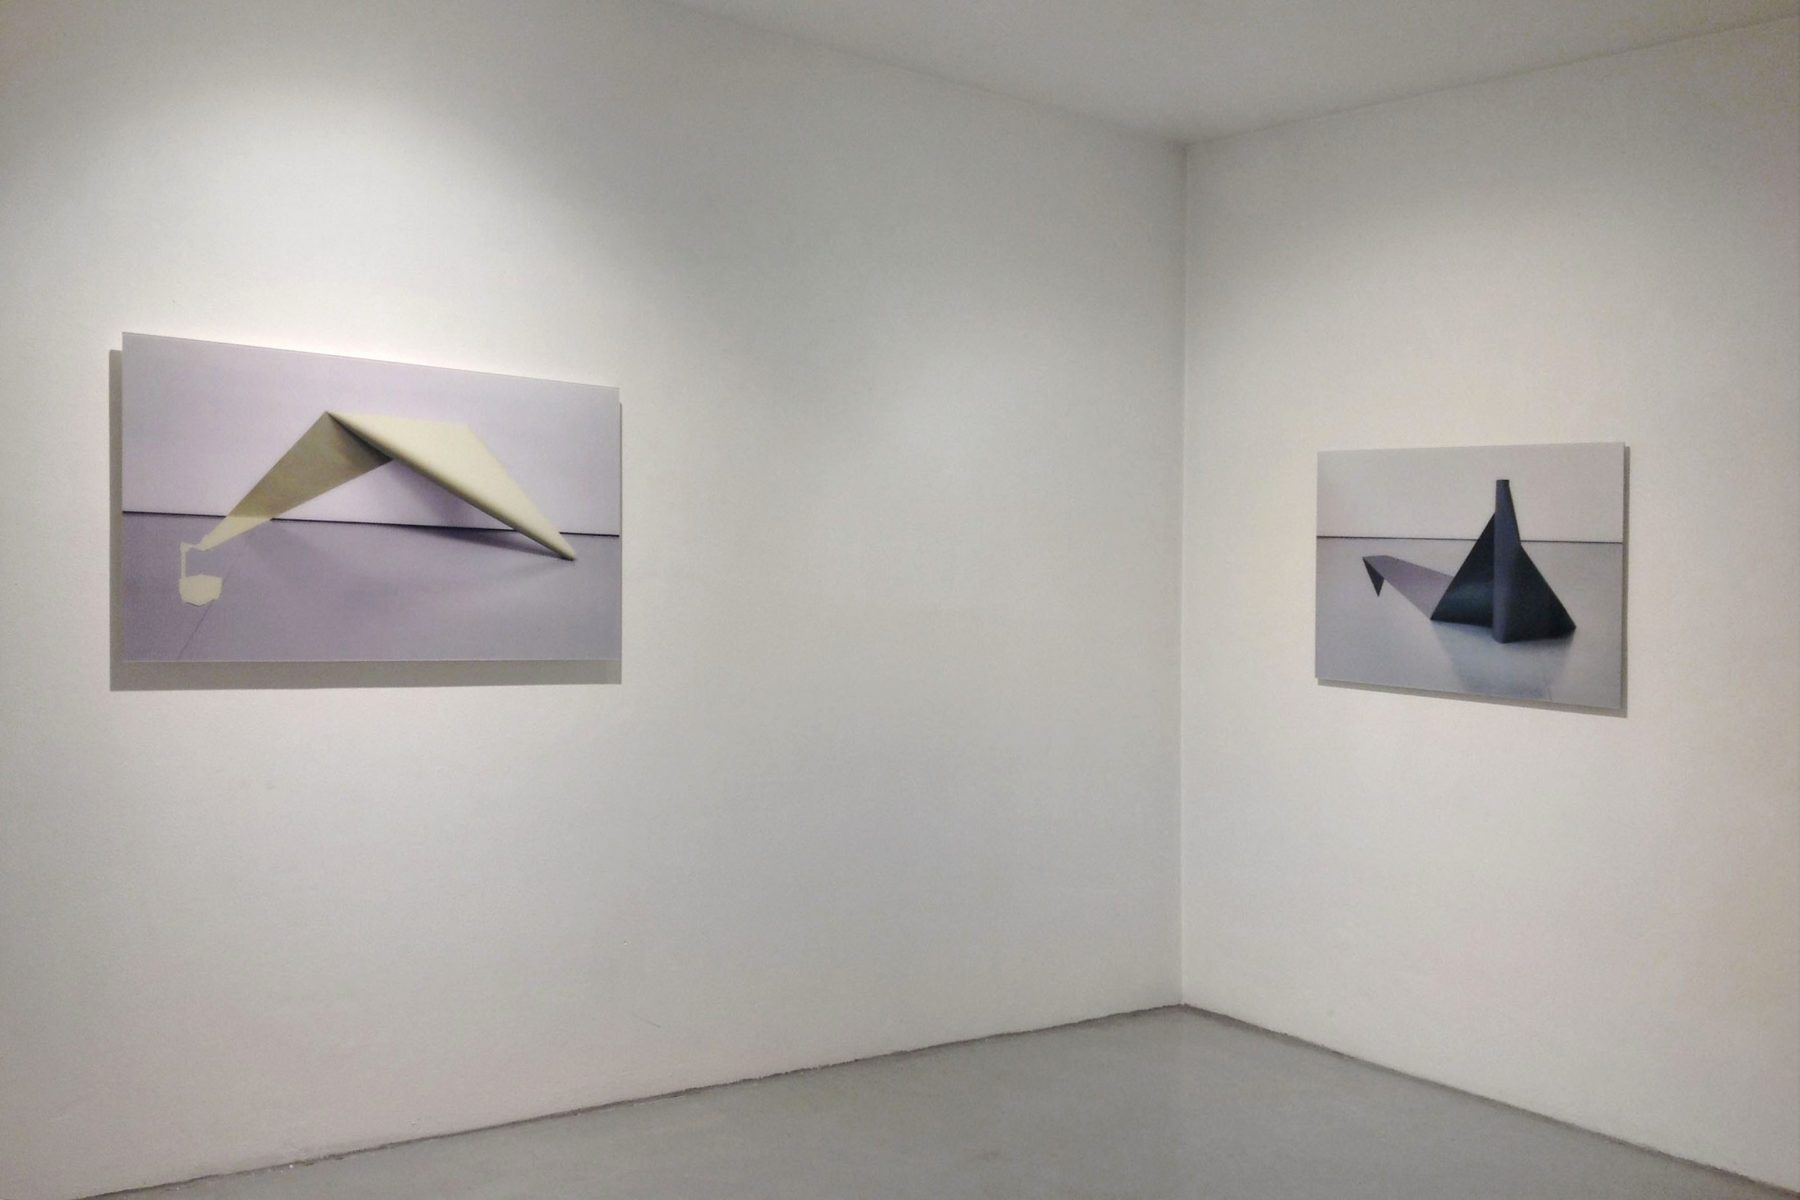 I. Eškinja, Infinity paper, 2013, show view at Deanesi Gallery, 12